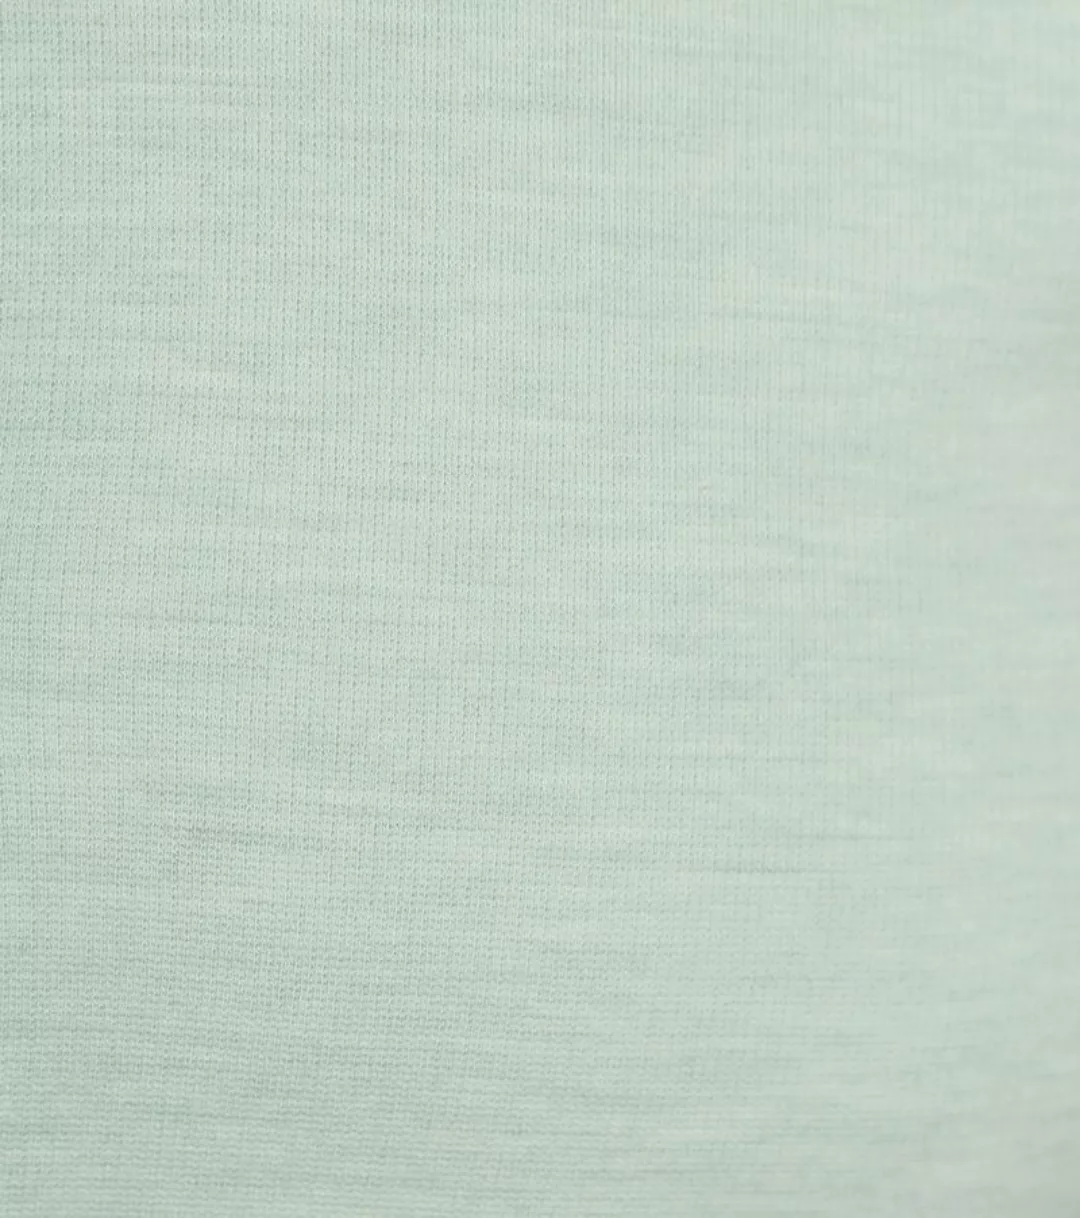 No Excess Shirt Jersey Mintgrün - Größe 3XL günstig online kaufen